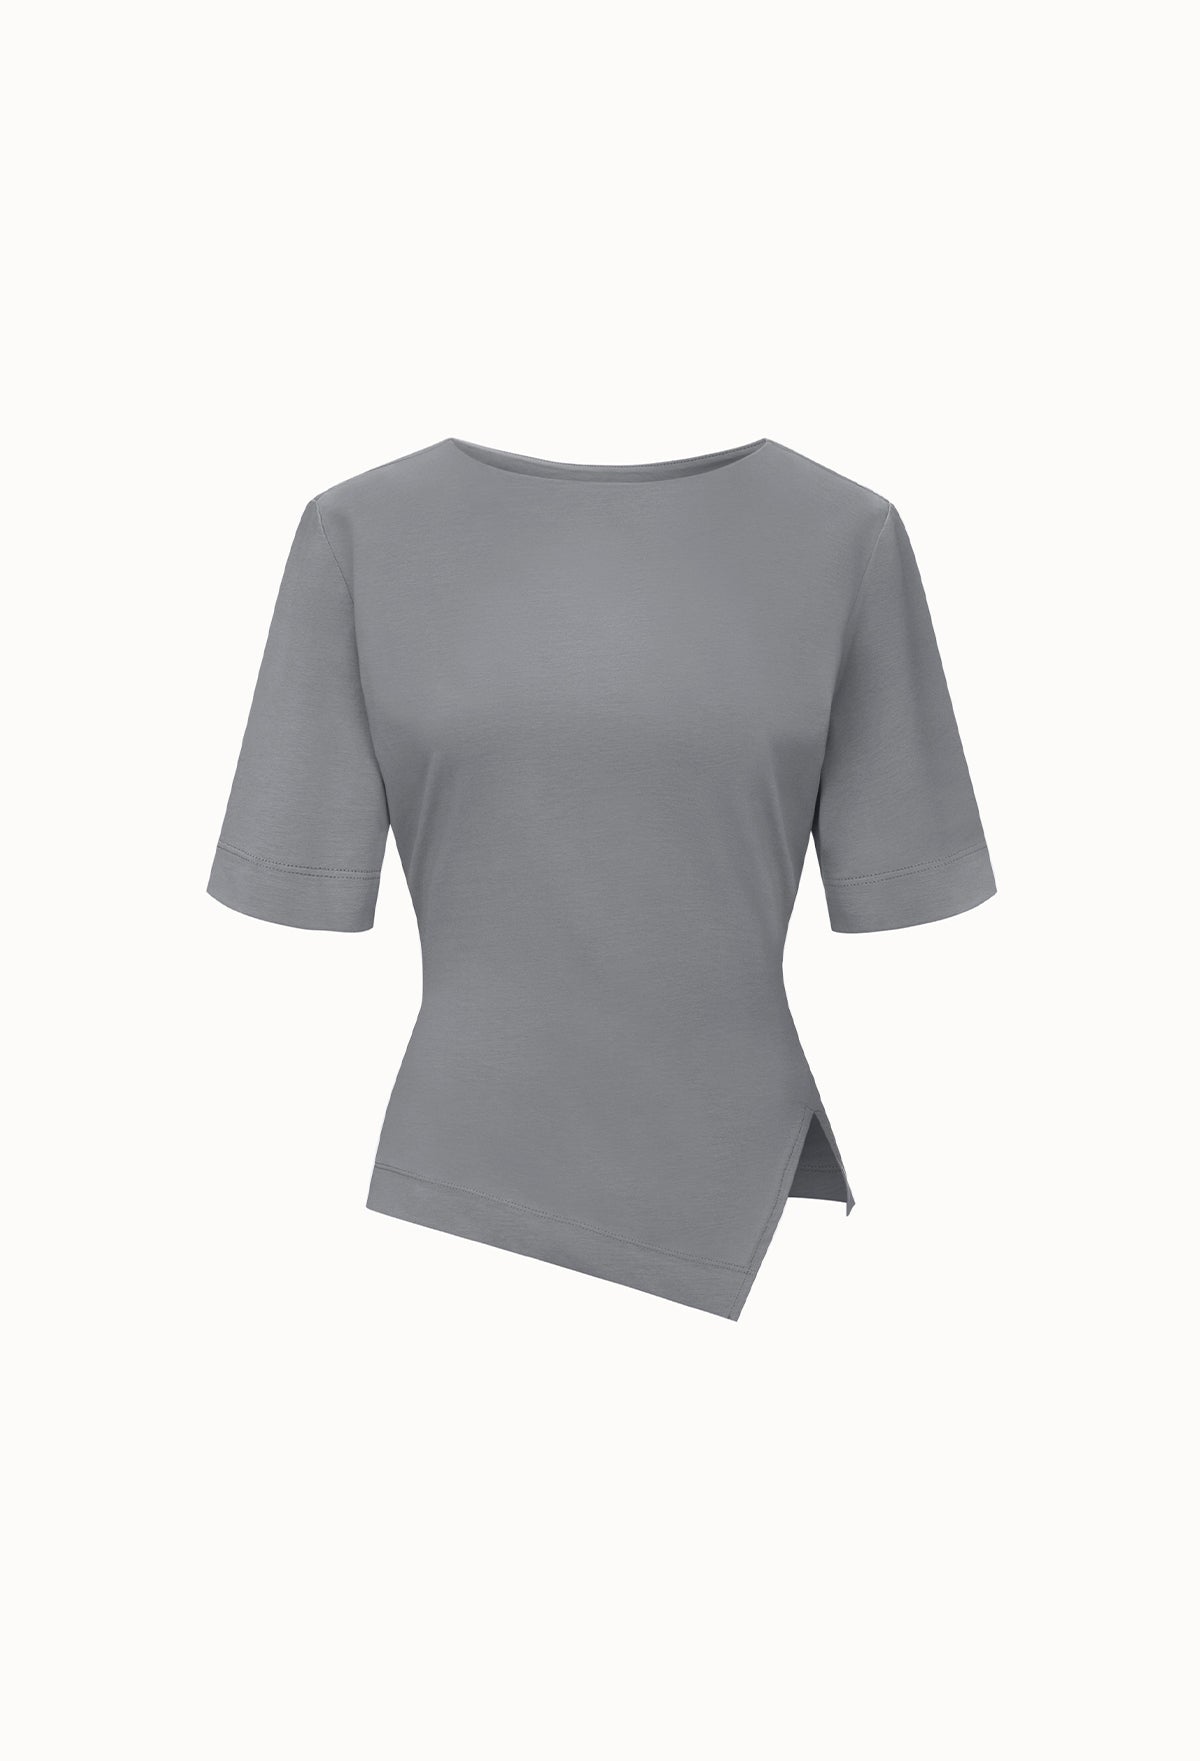 Asymmetrical Side Slit T-shirt In Cool Gray